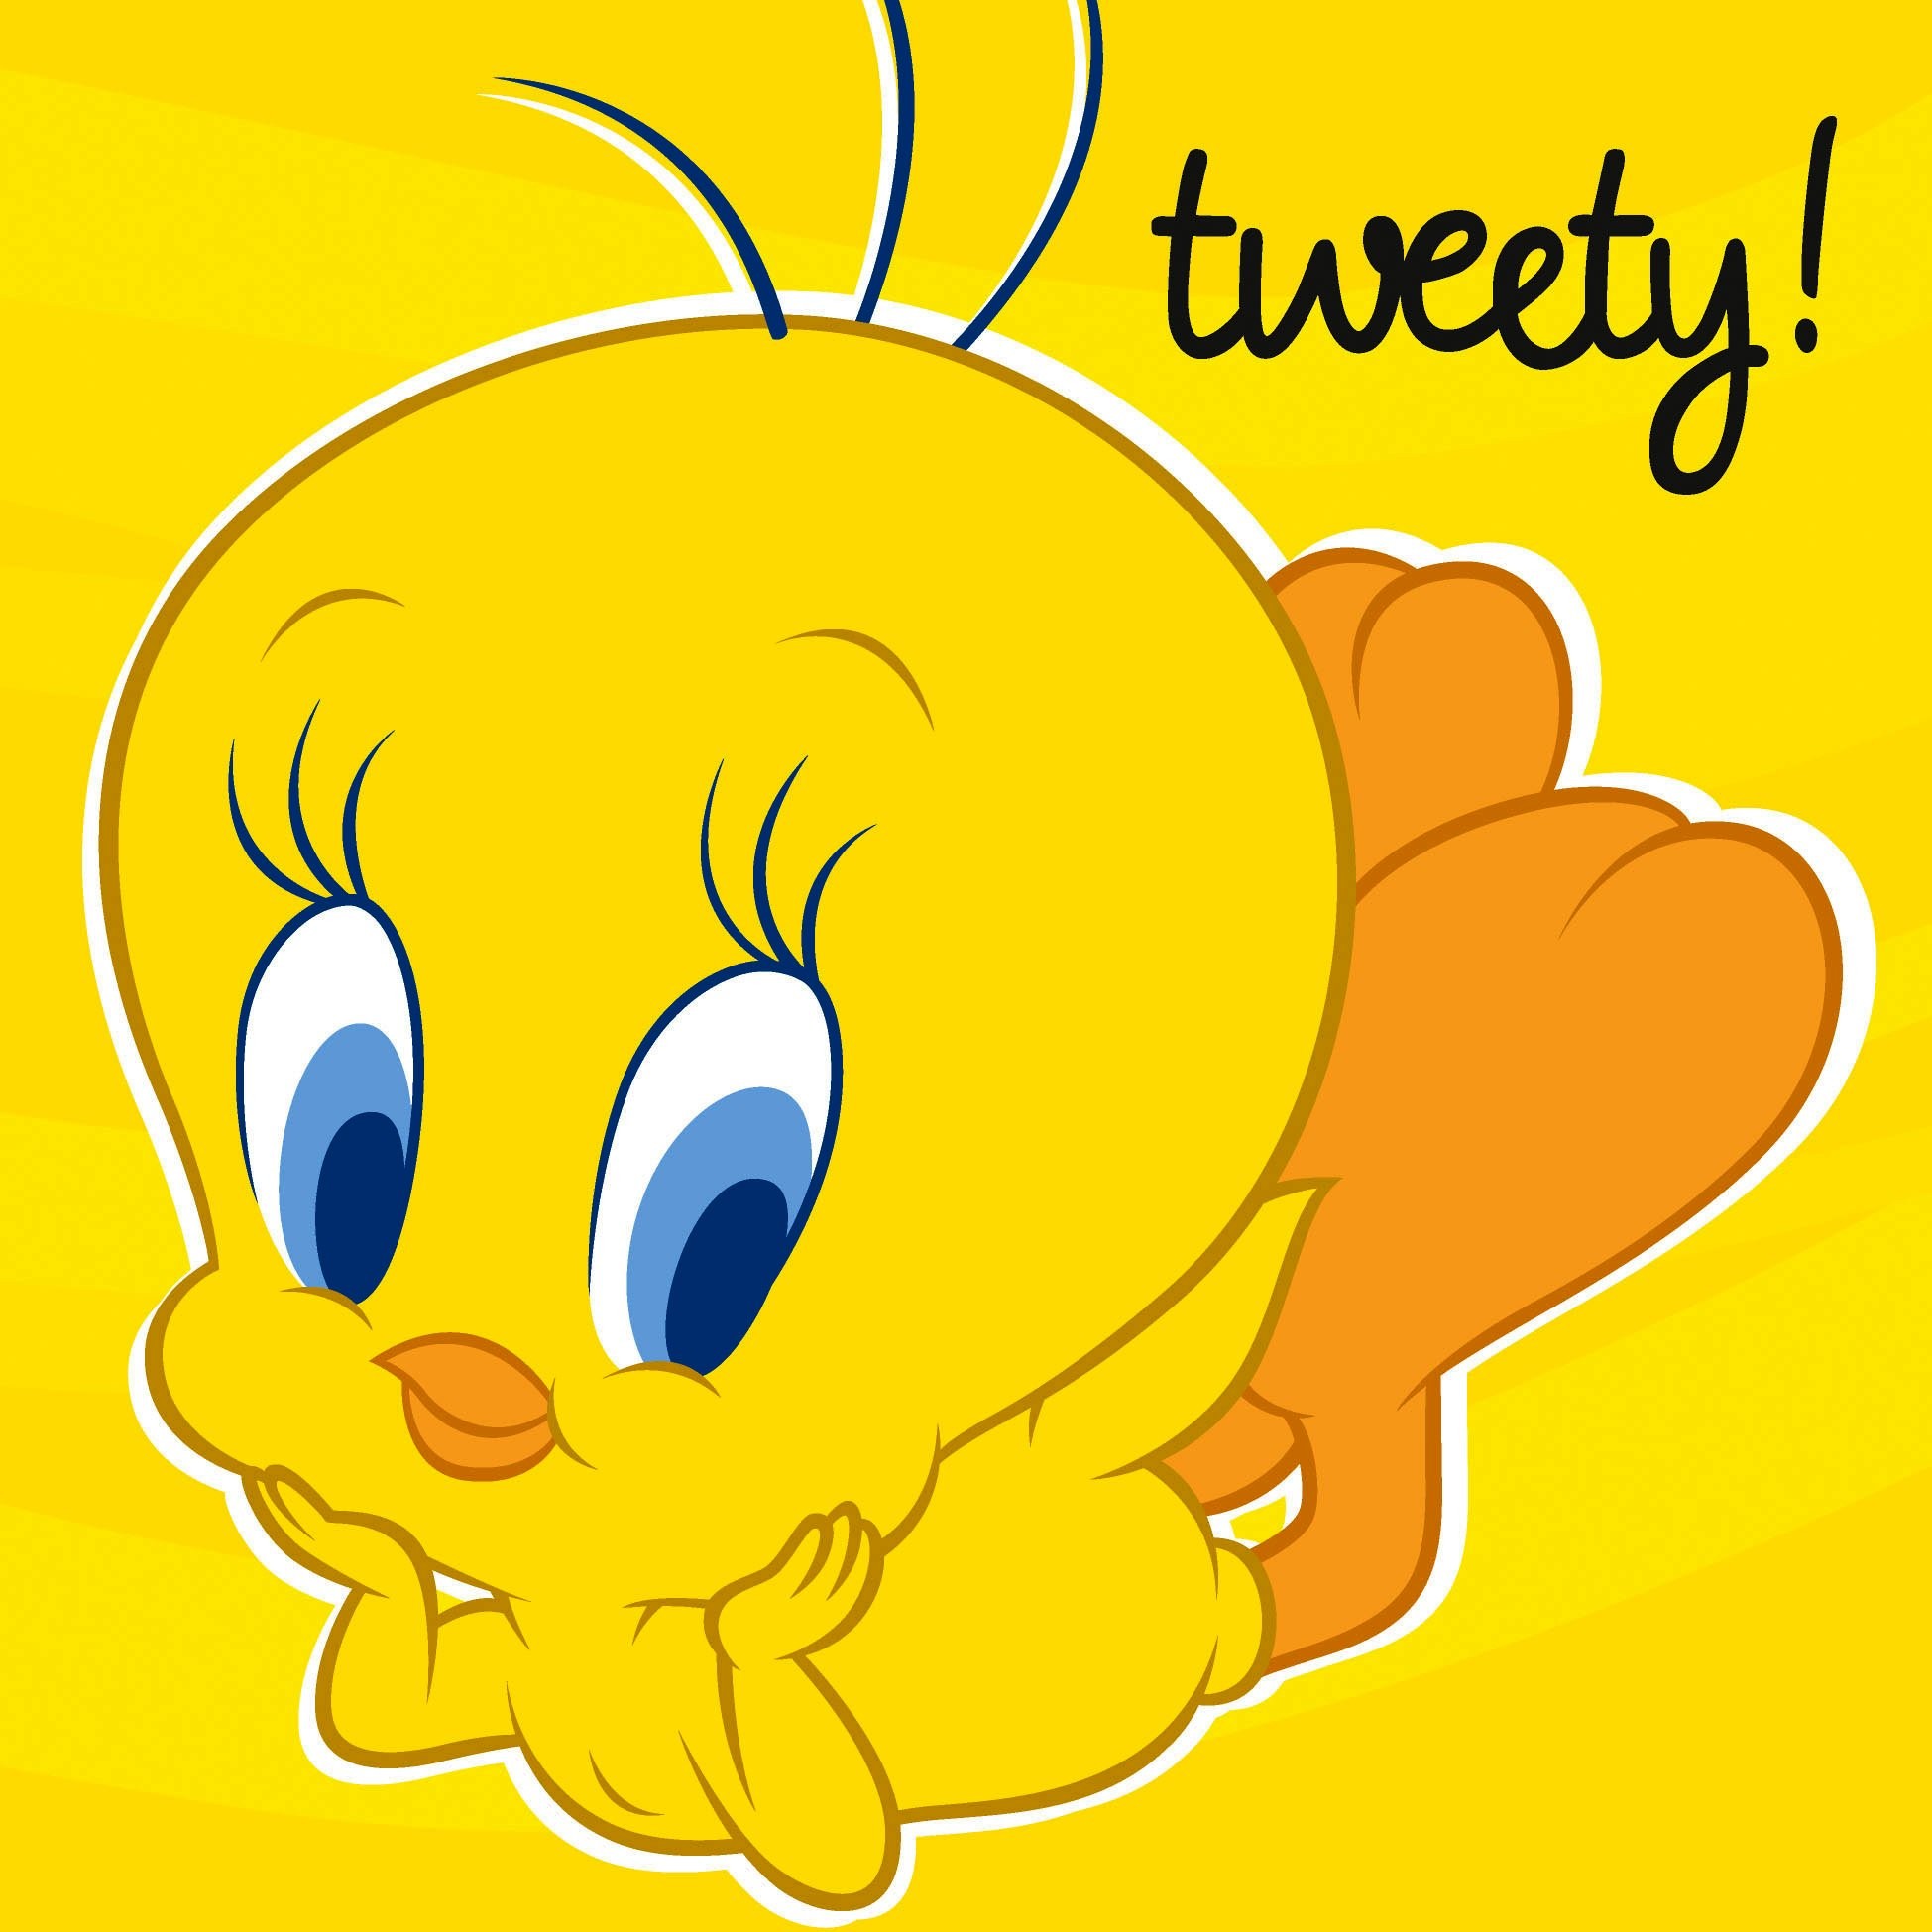 tweety fond d'écran hd,dessin animé,jaune,dessin animé,ligne,illustration